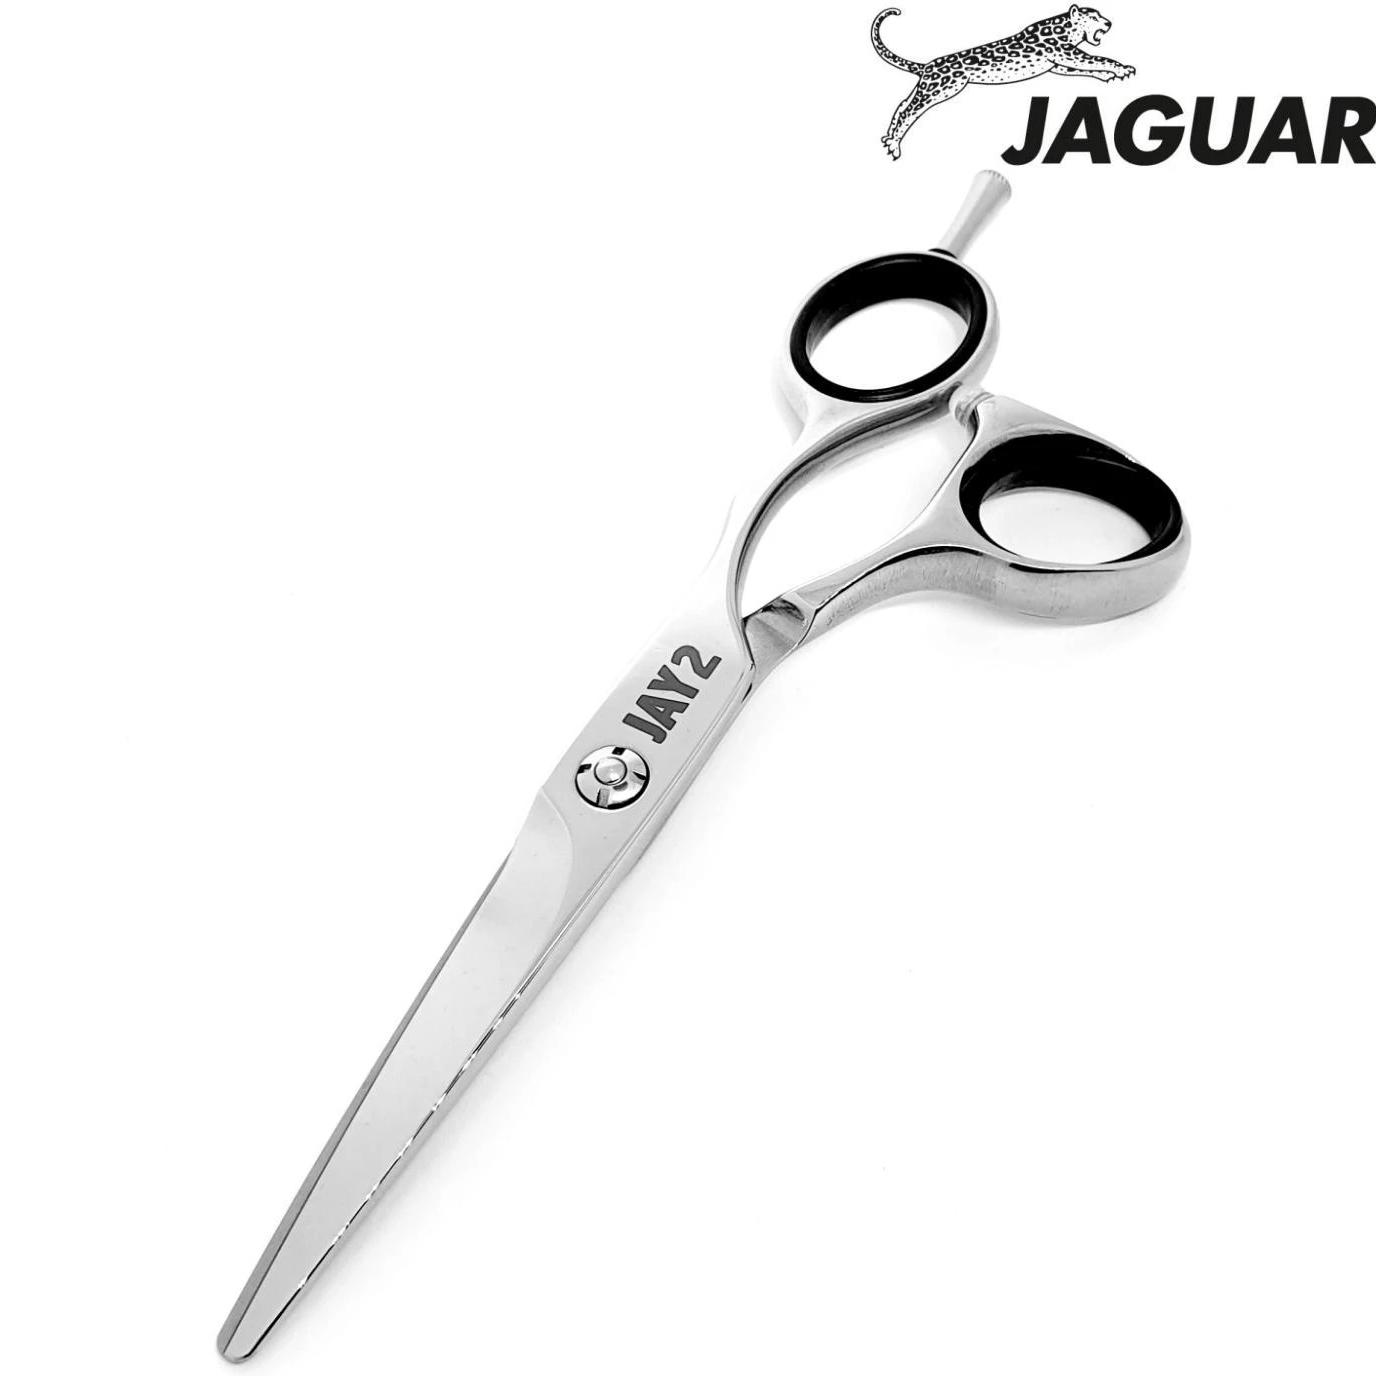 Jaguar Jay2 Haircutting Scissor For Beginners